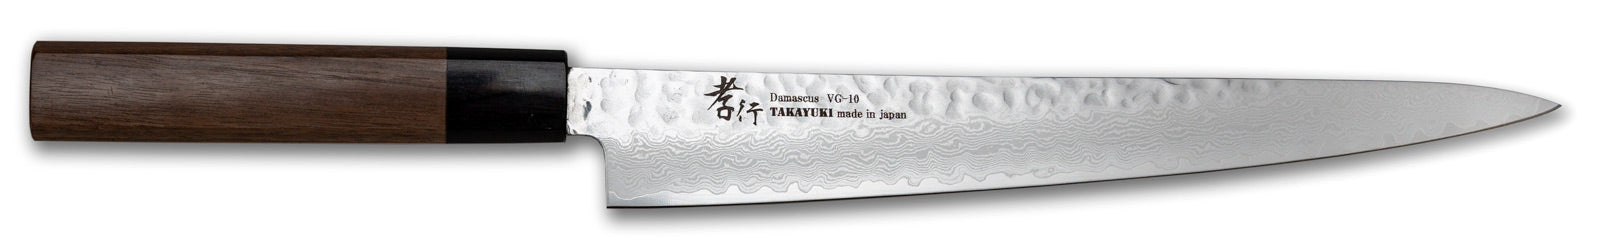 Sakai Takayuki 33-Layer Damascus Damascus Sujihiki Slicer/Carving Knife, Walnut Wood Handle, 240mm / 9.5"